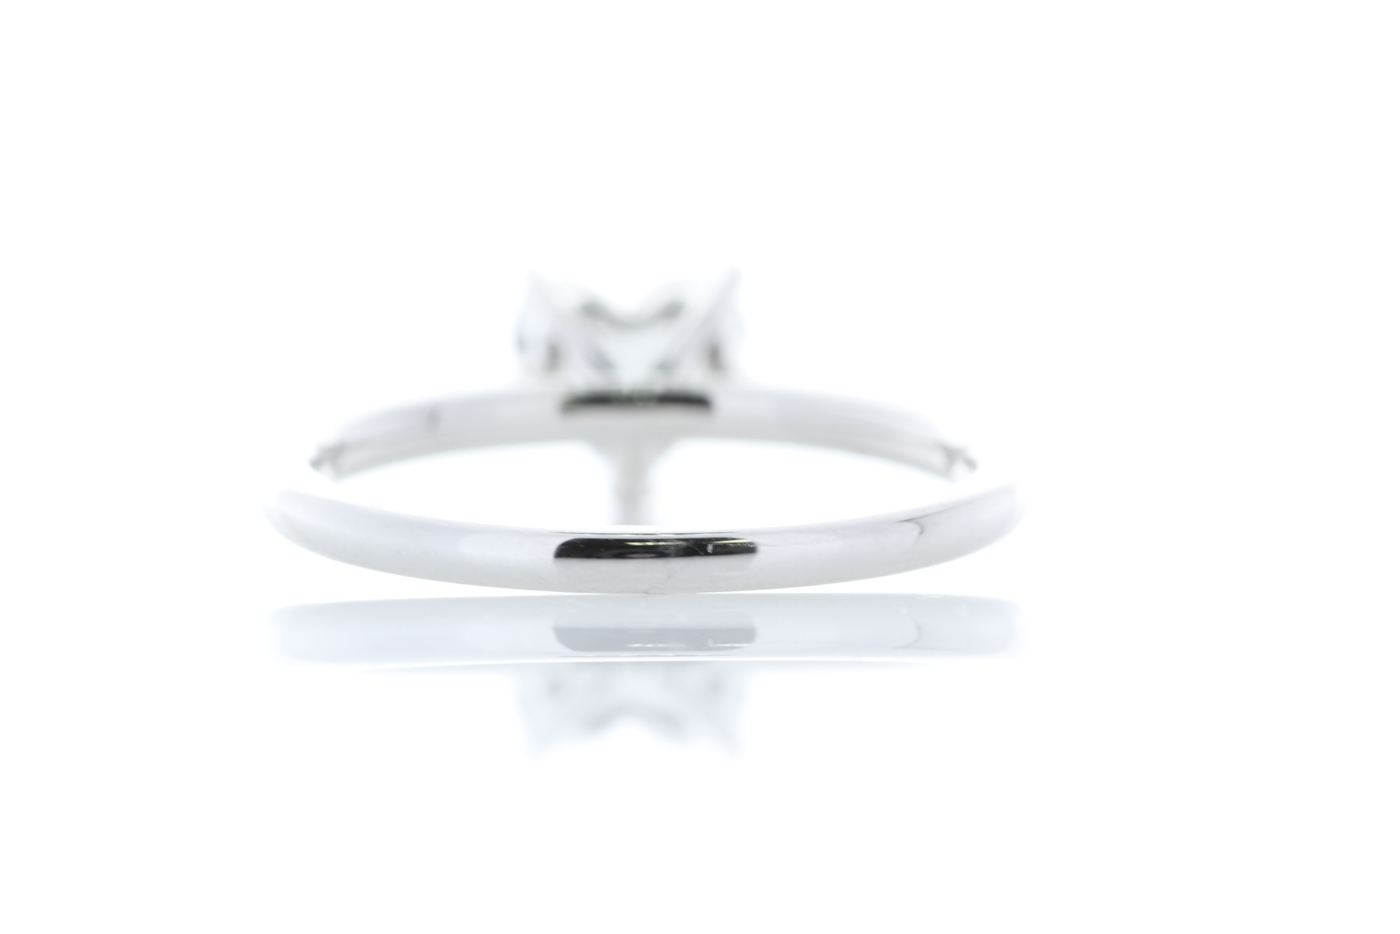 18ct White Gold Heart Shape Diamond Ring 1.17 Carats - Image 3 of 5